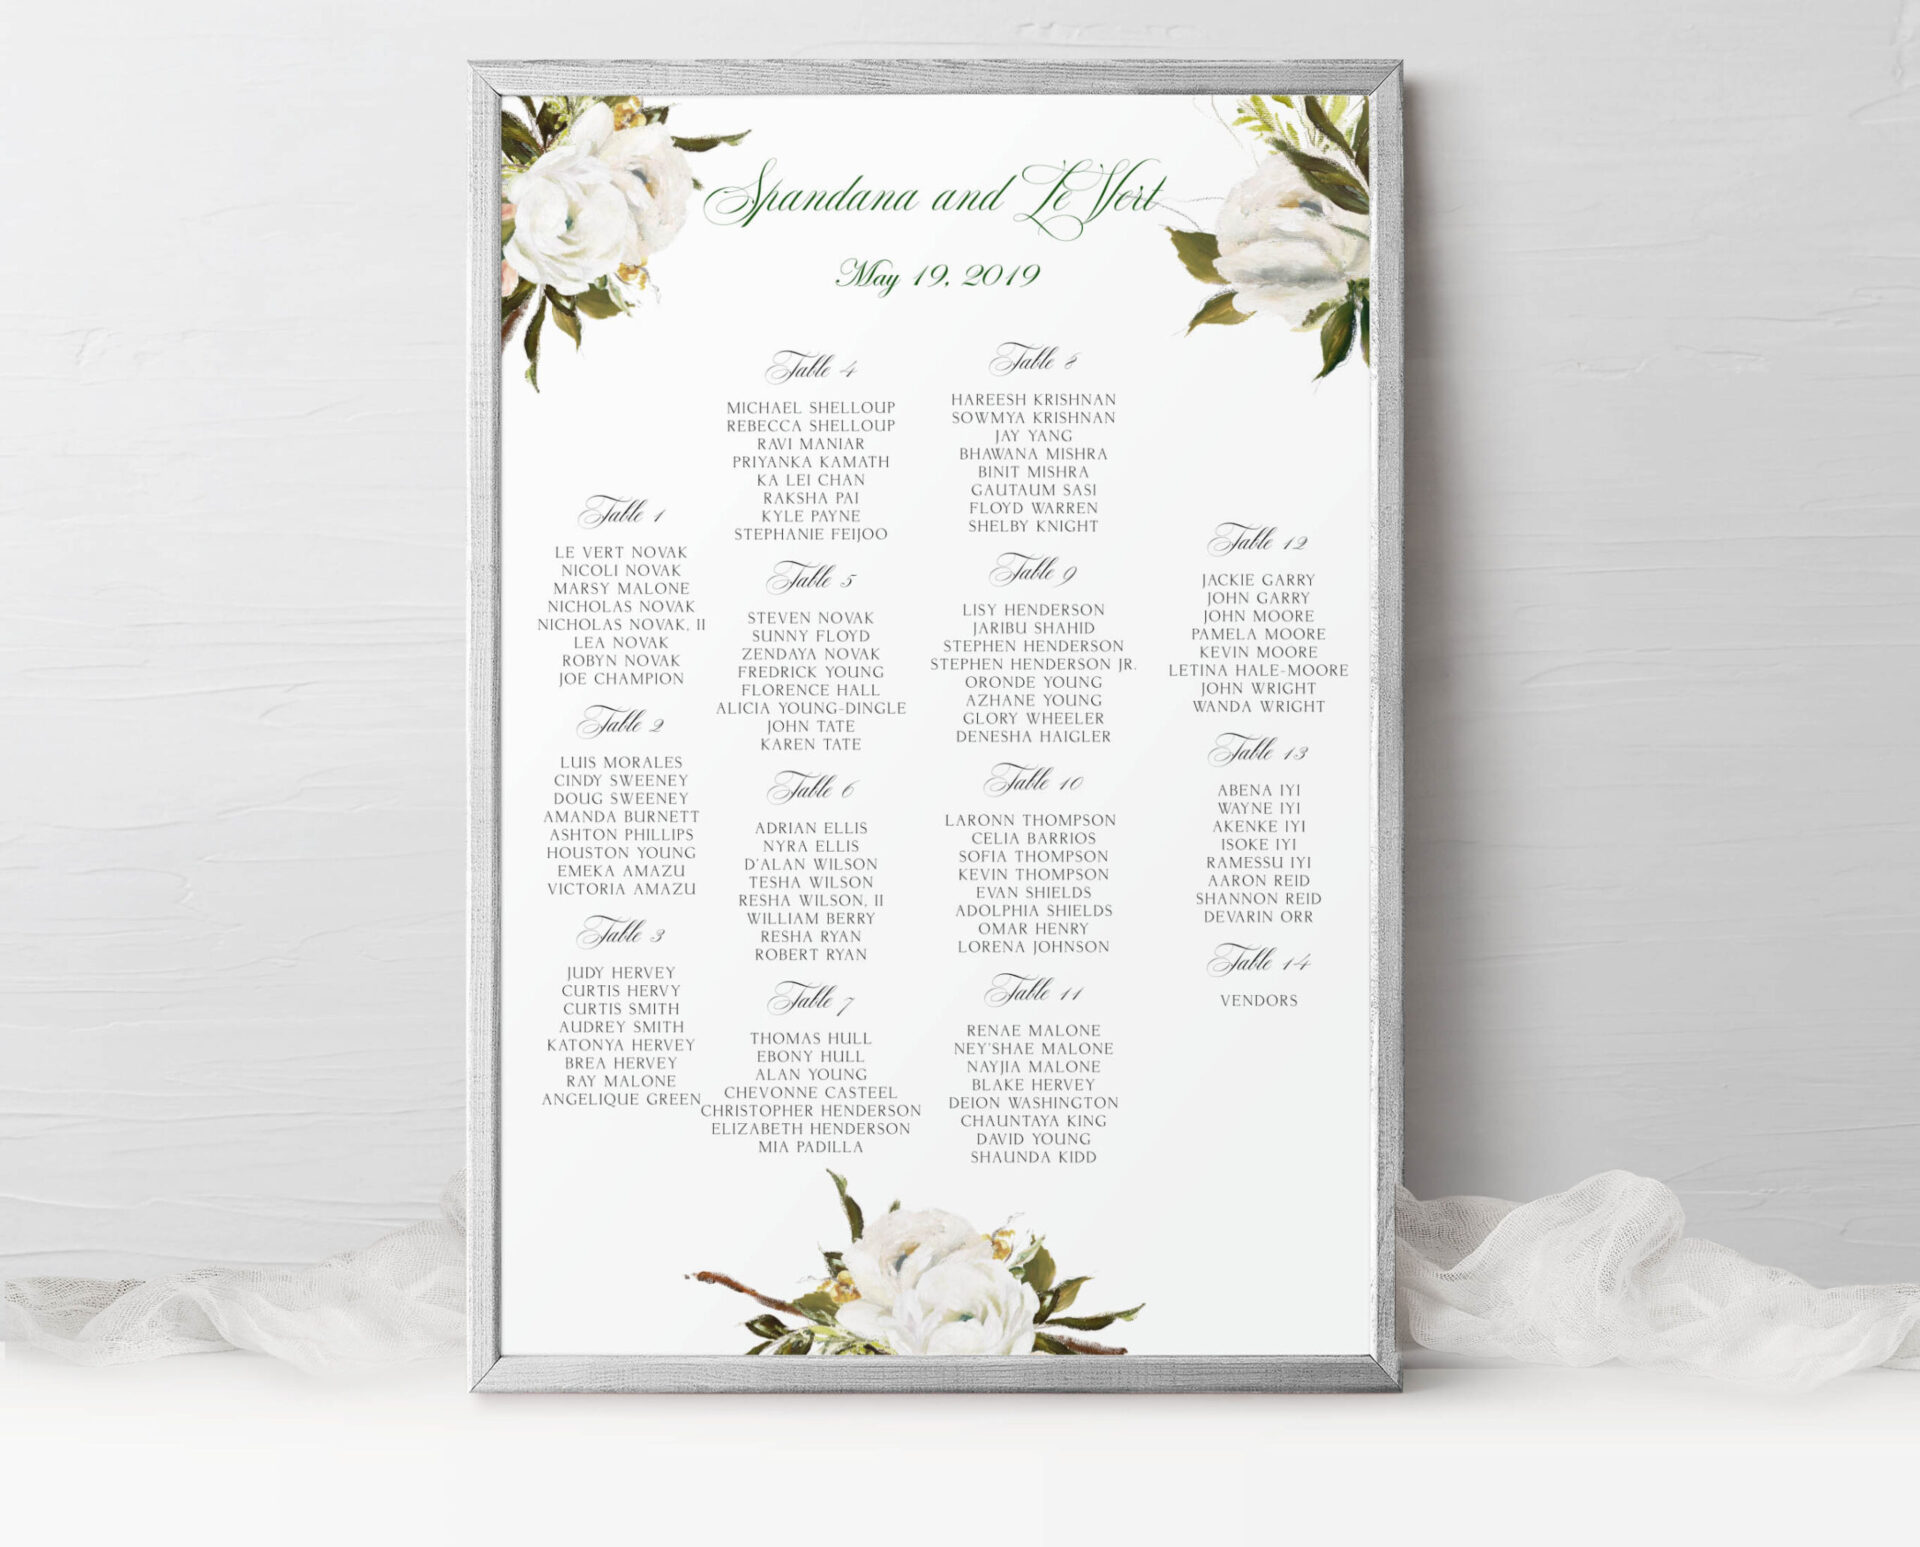 instant download template 120 printable seating plan Elegant wedding escort cards Modern Wedding Seating Chart Wedding Table Plan